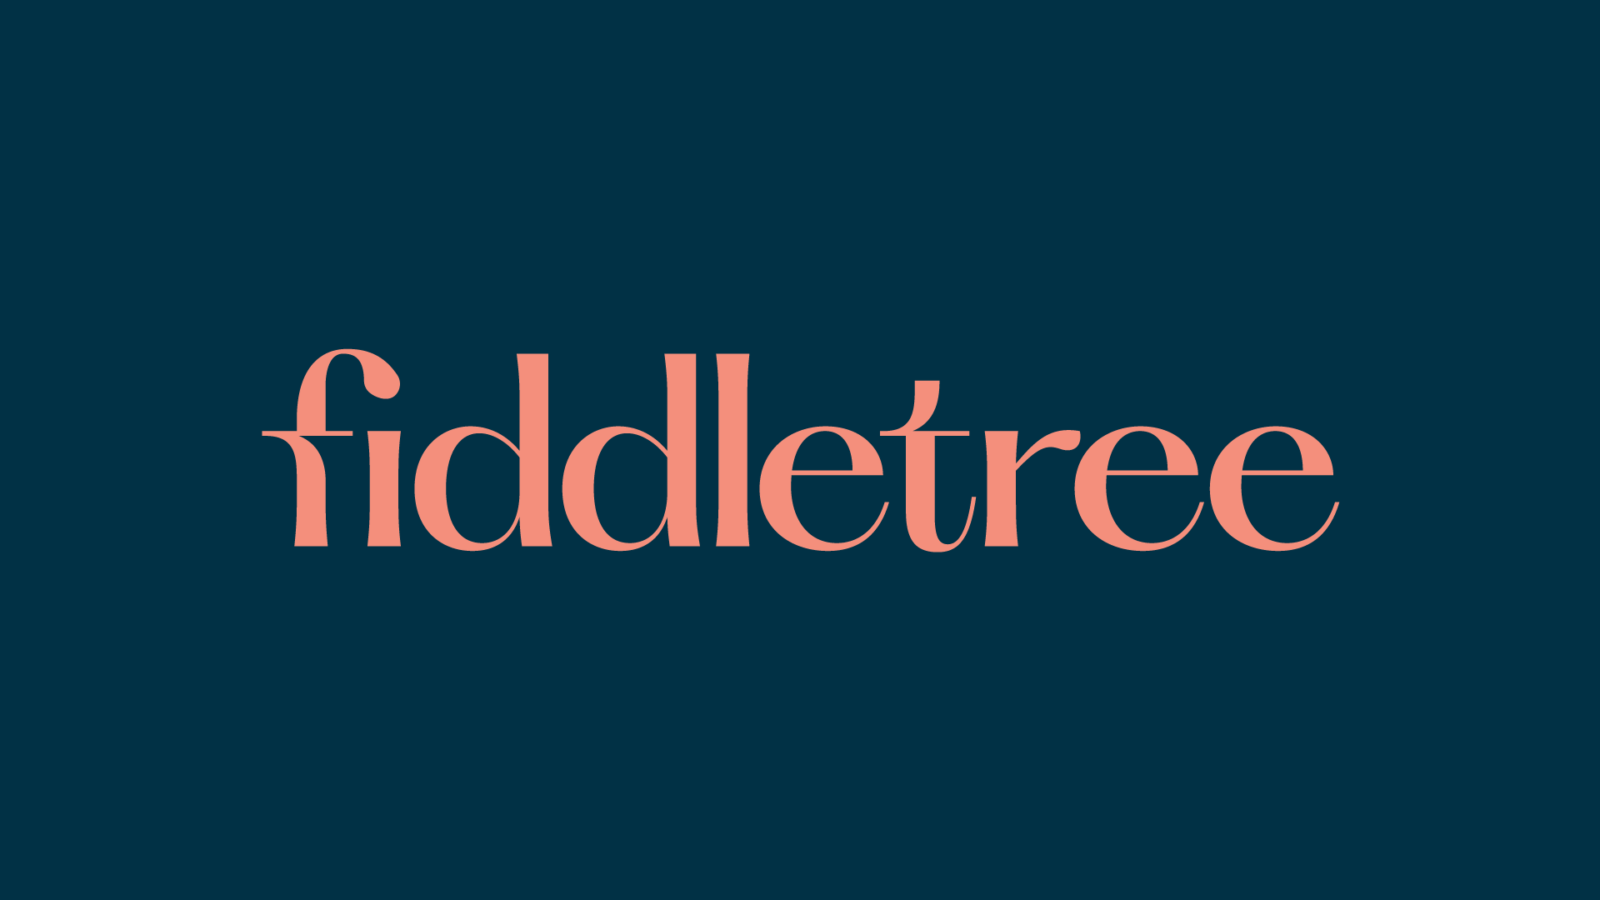 Fiddletree Restaurant and Bar Logo Design